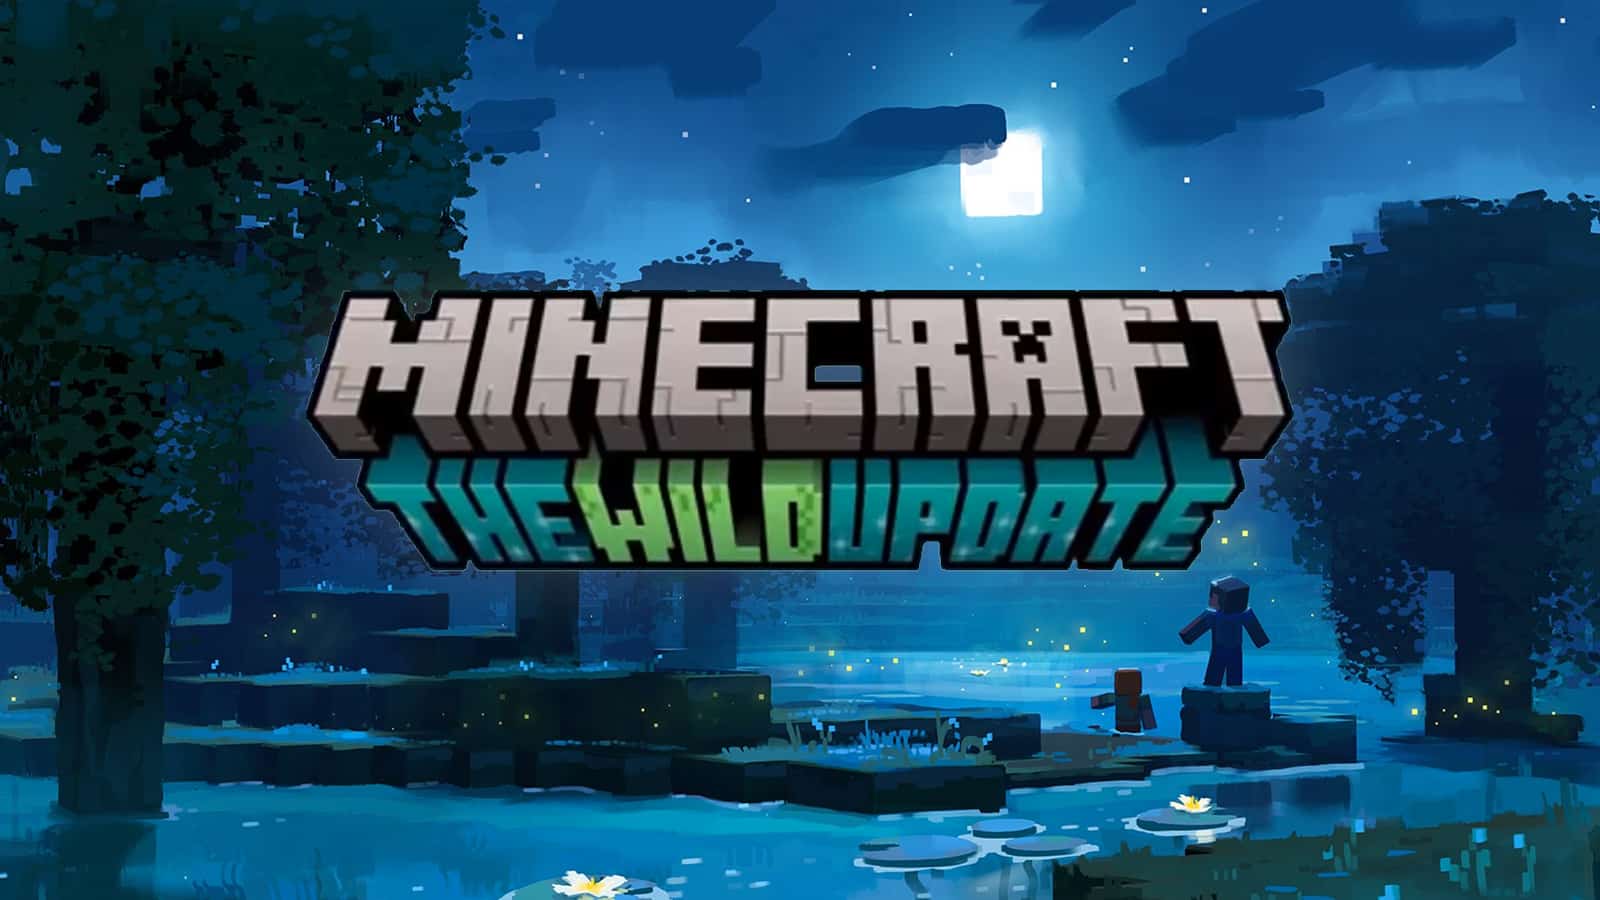 Minecraft 1.19 The Wild features